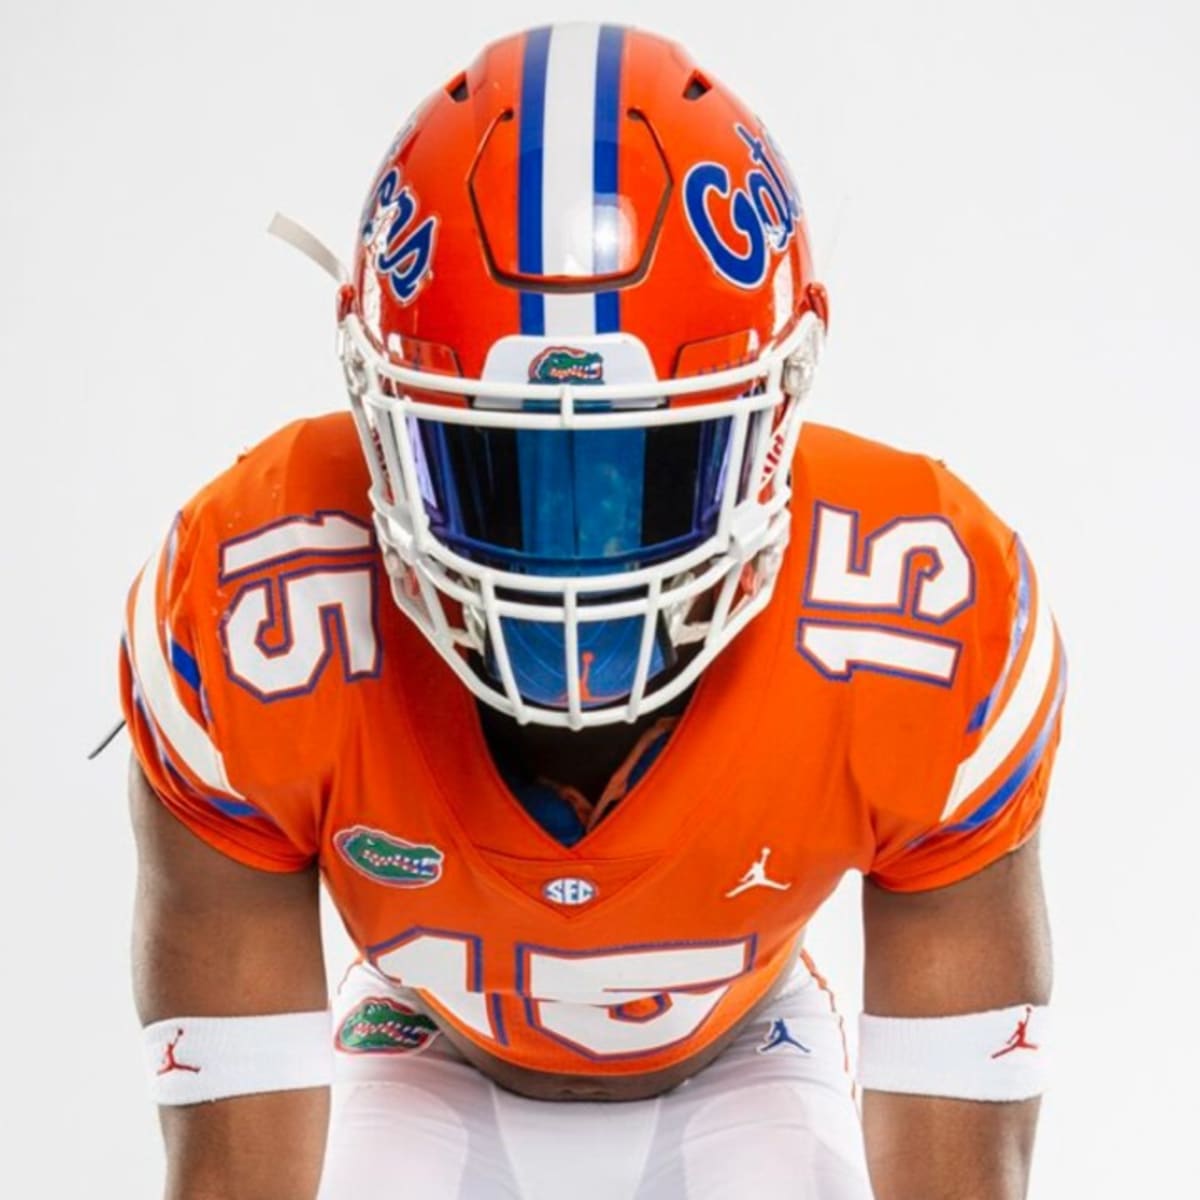 Florida Gators: Team unveils all-orange jerseys - Sports Illustrated